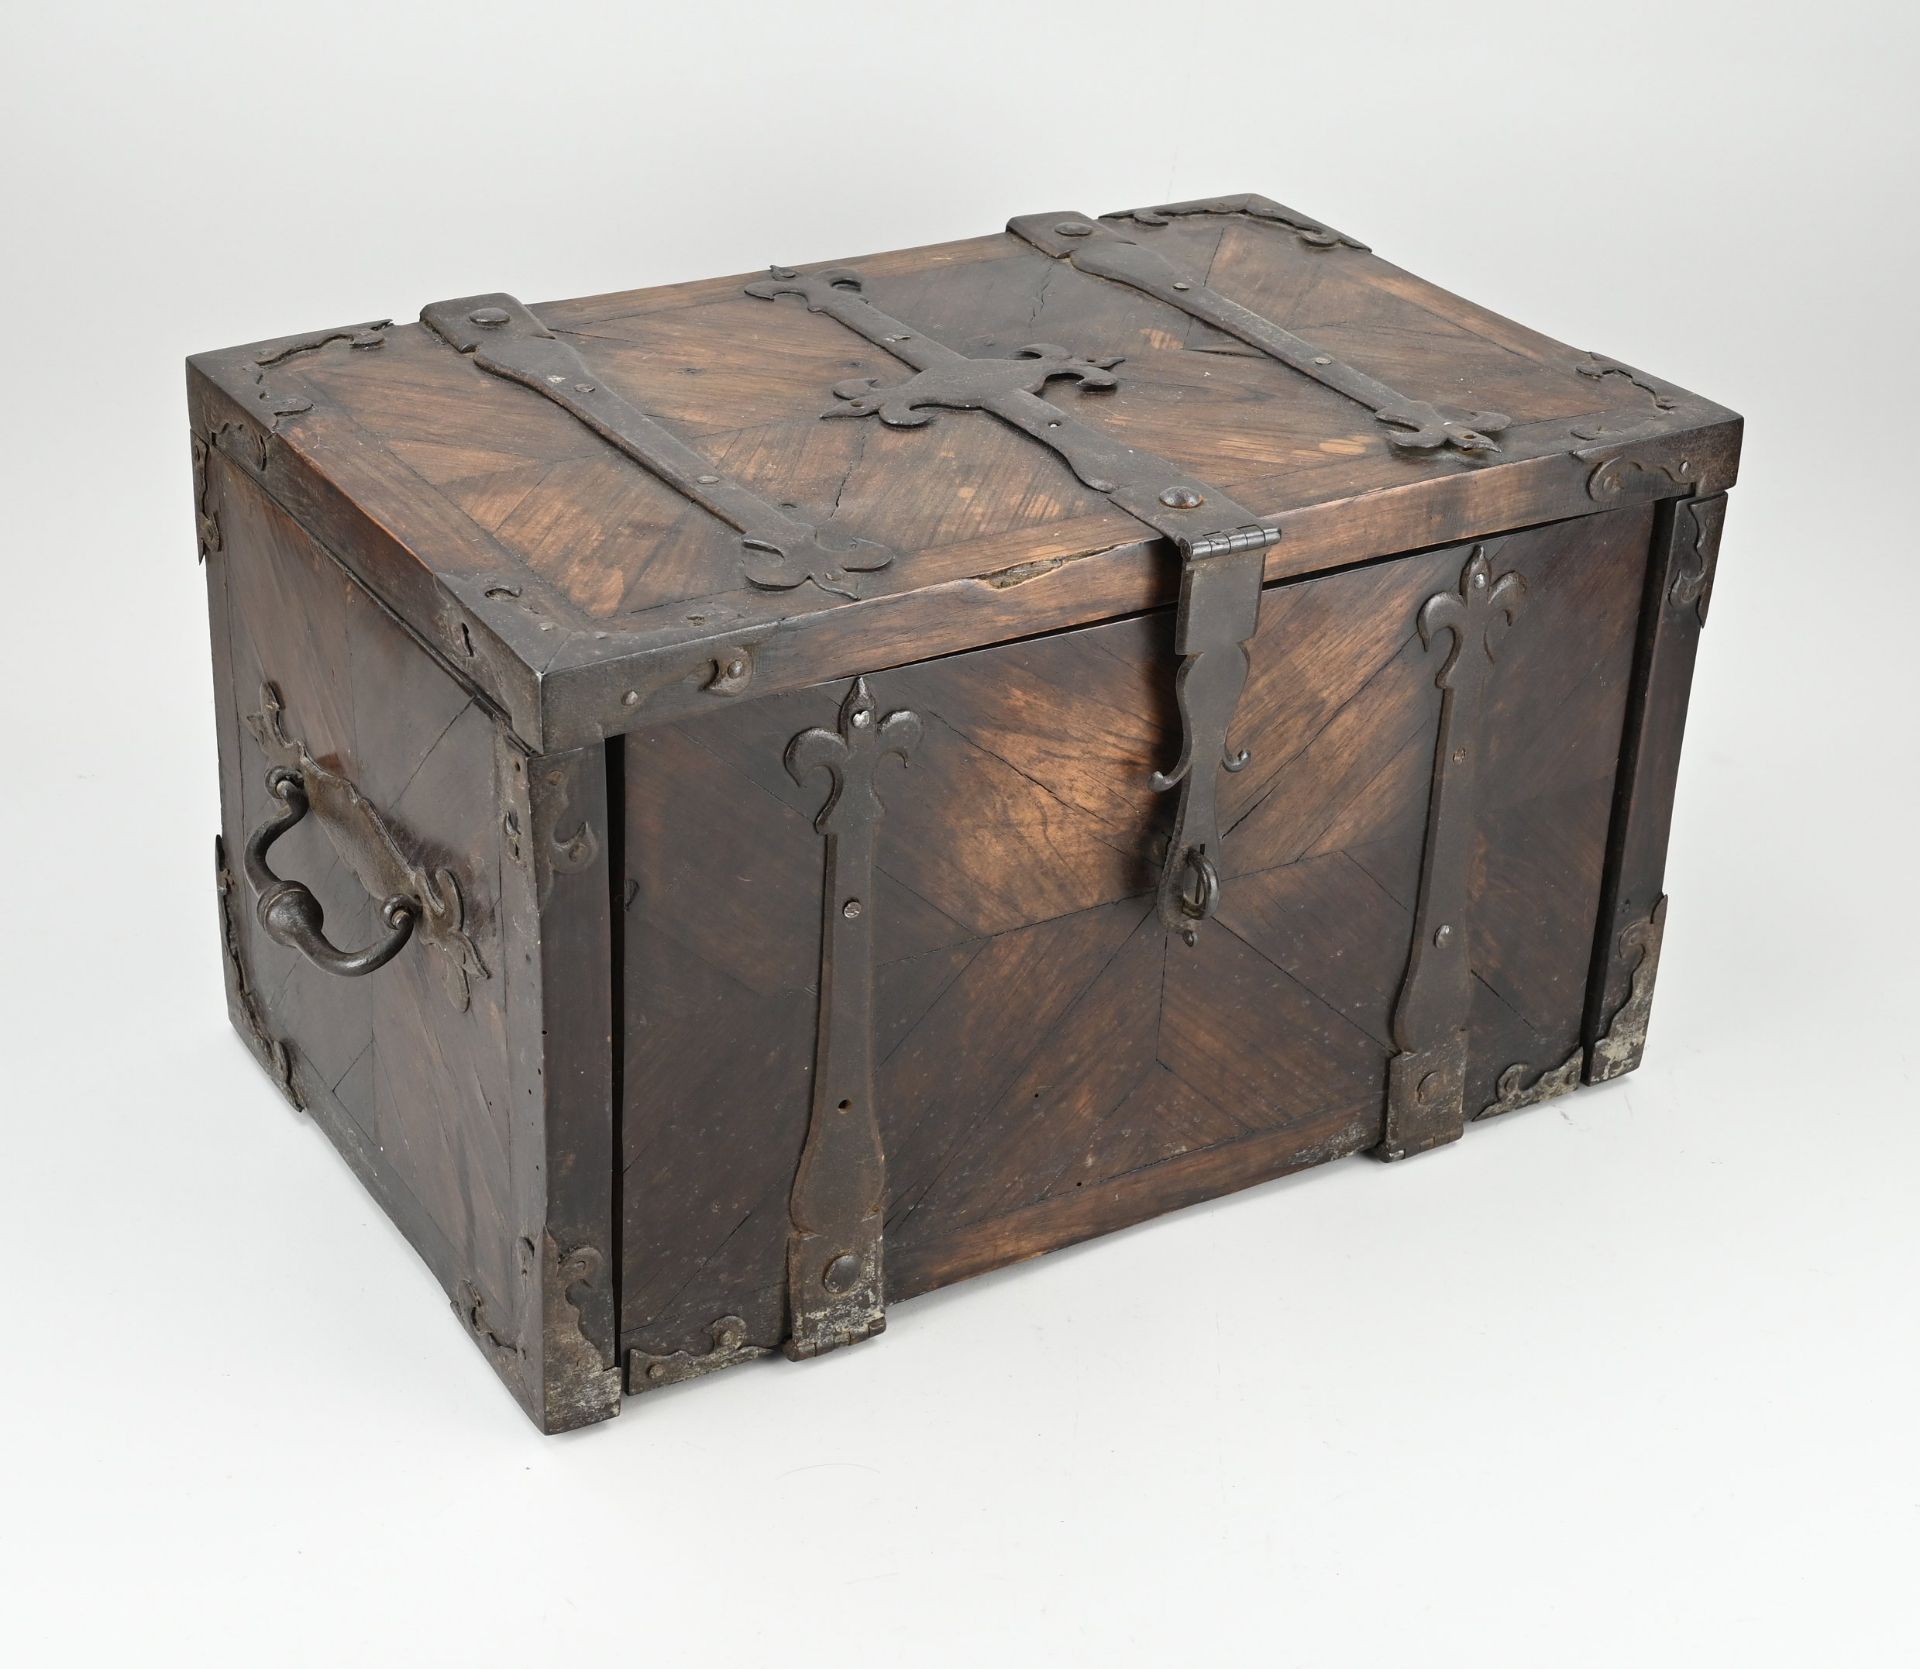 Rare 18th century ship's chest